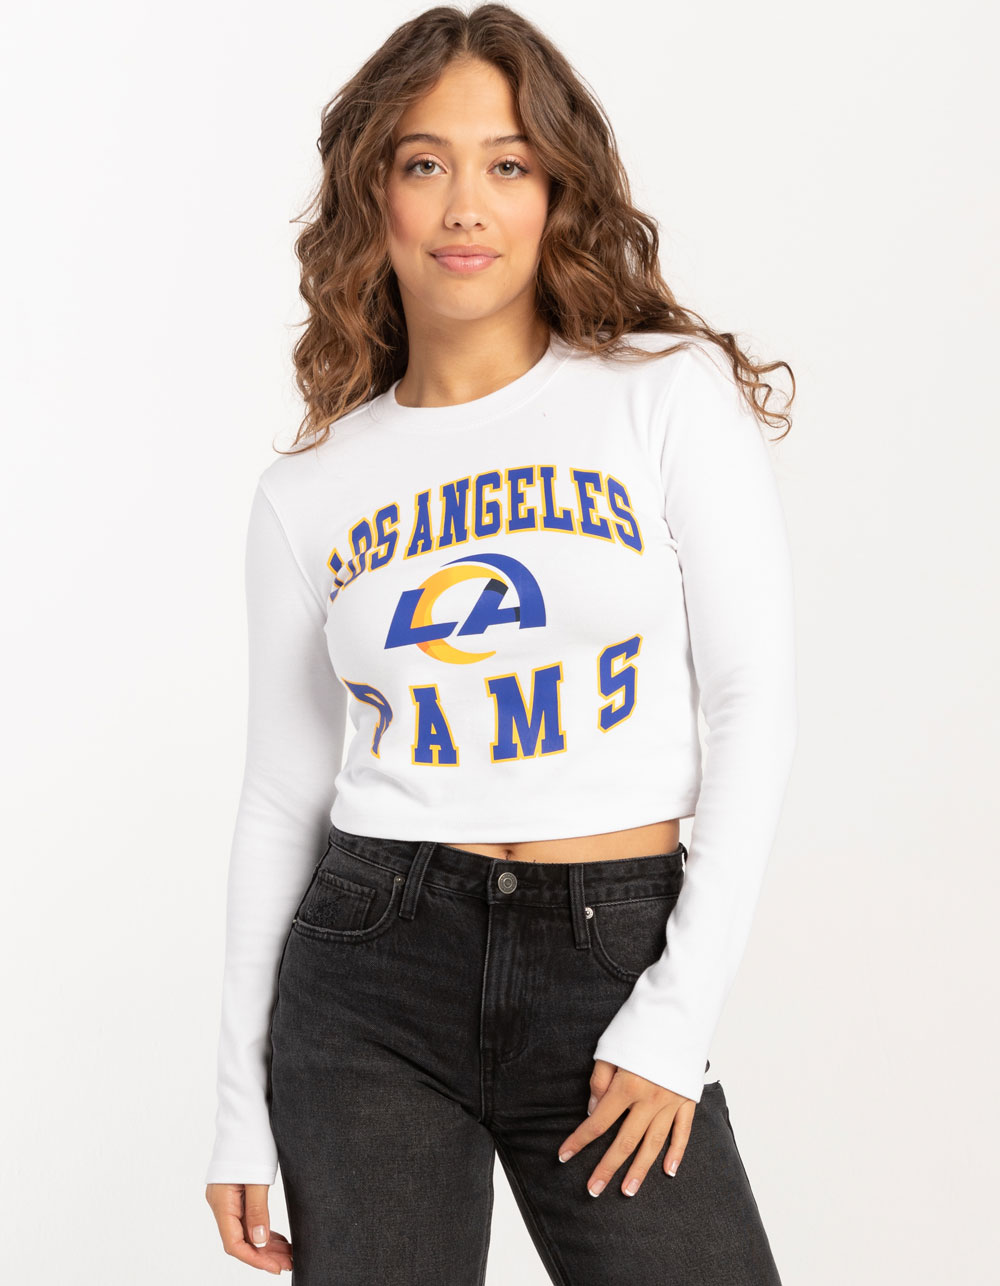 Los Angeles Rams Women's T-Shirt